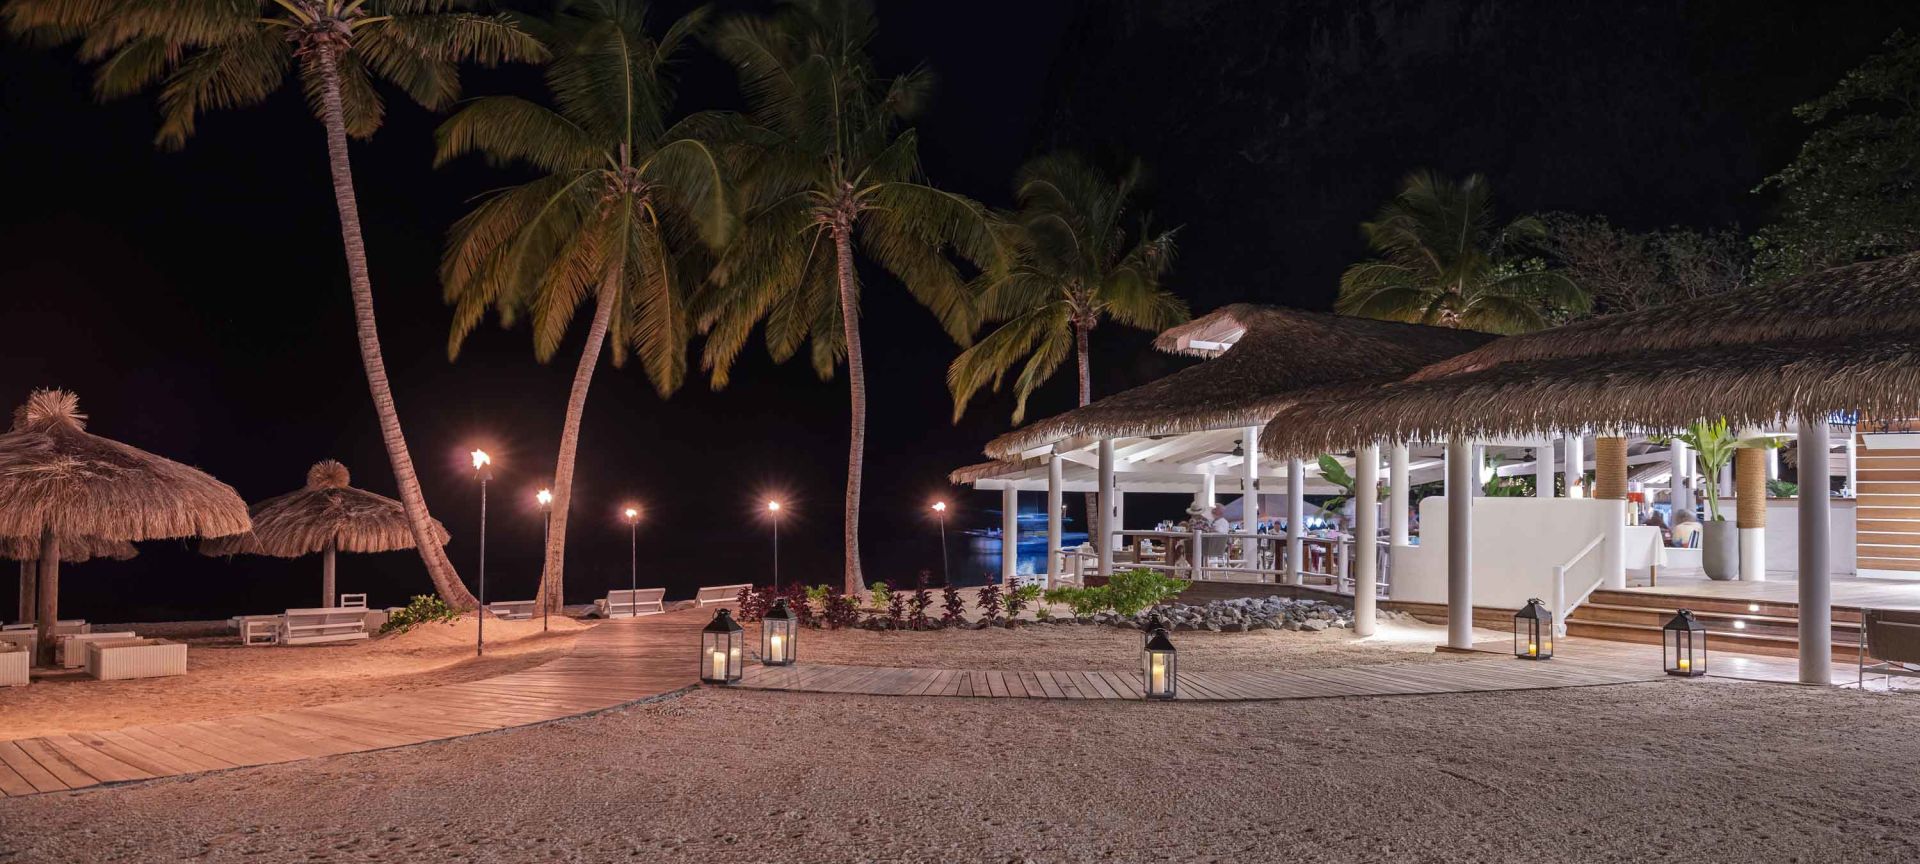 A Restaurant on the Beach at Nighttime